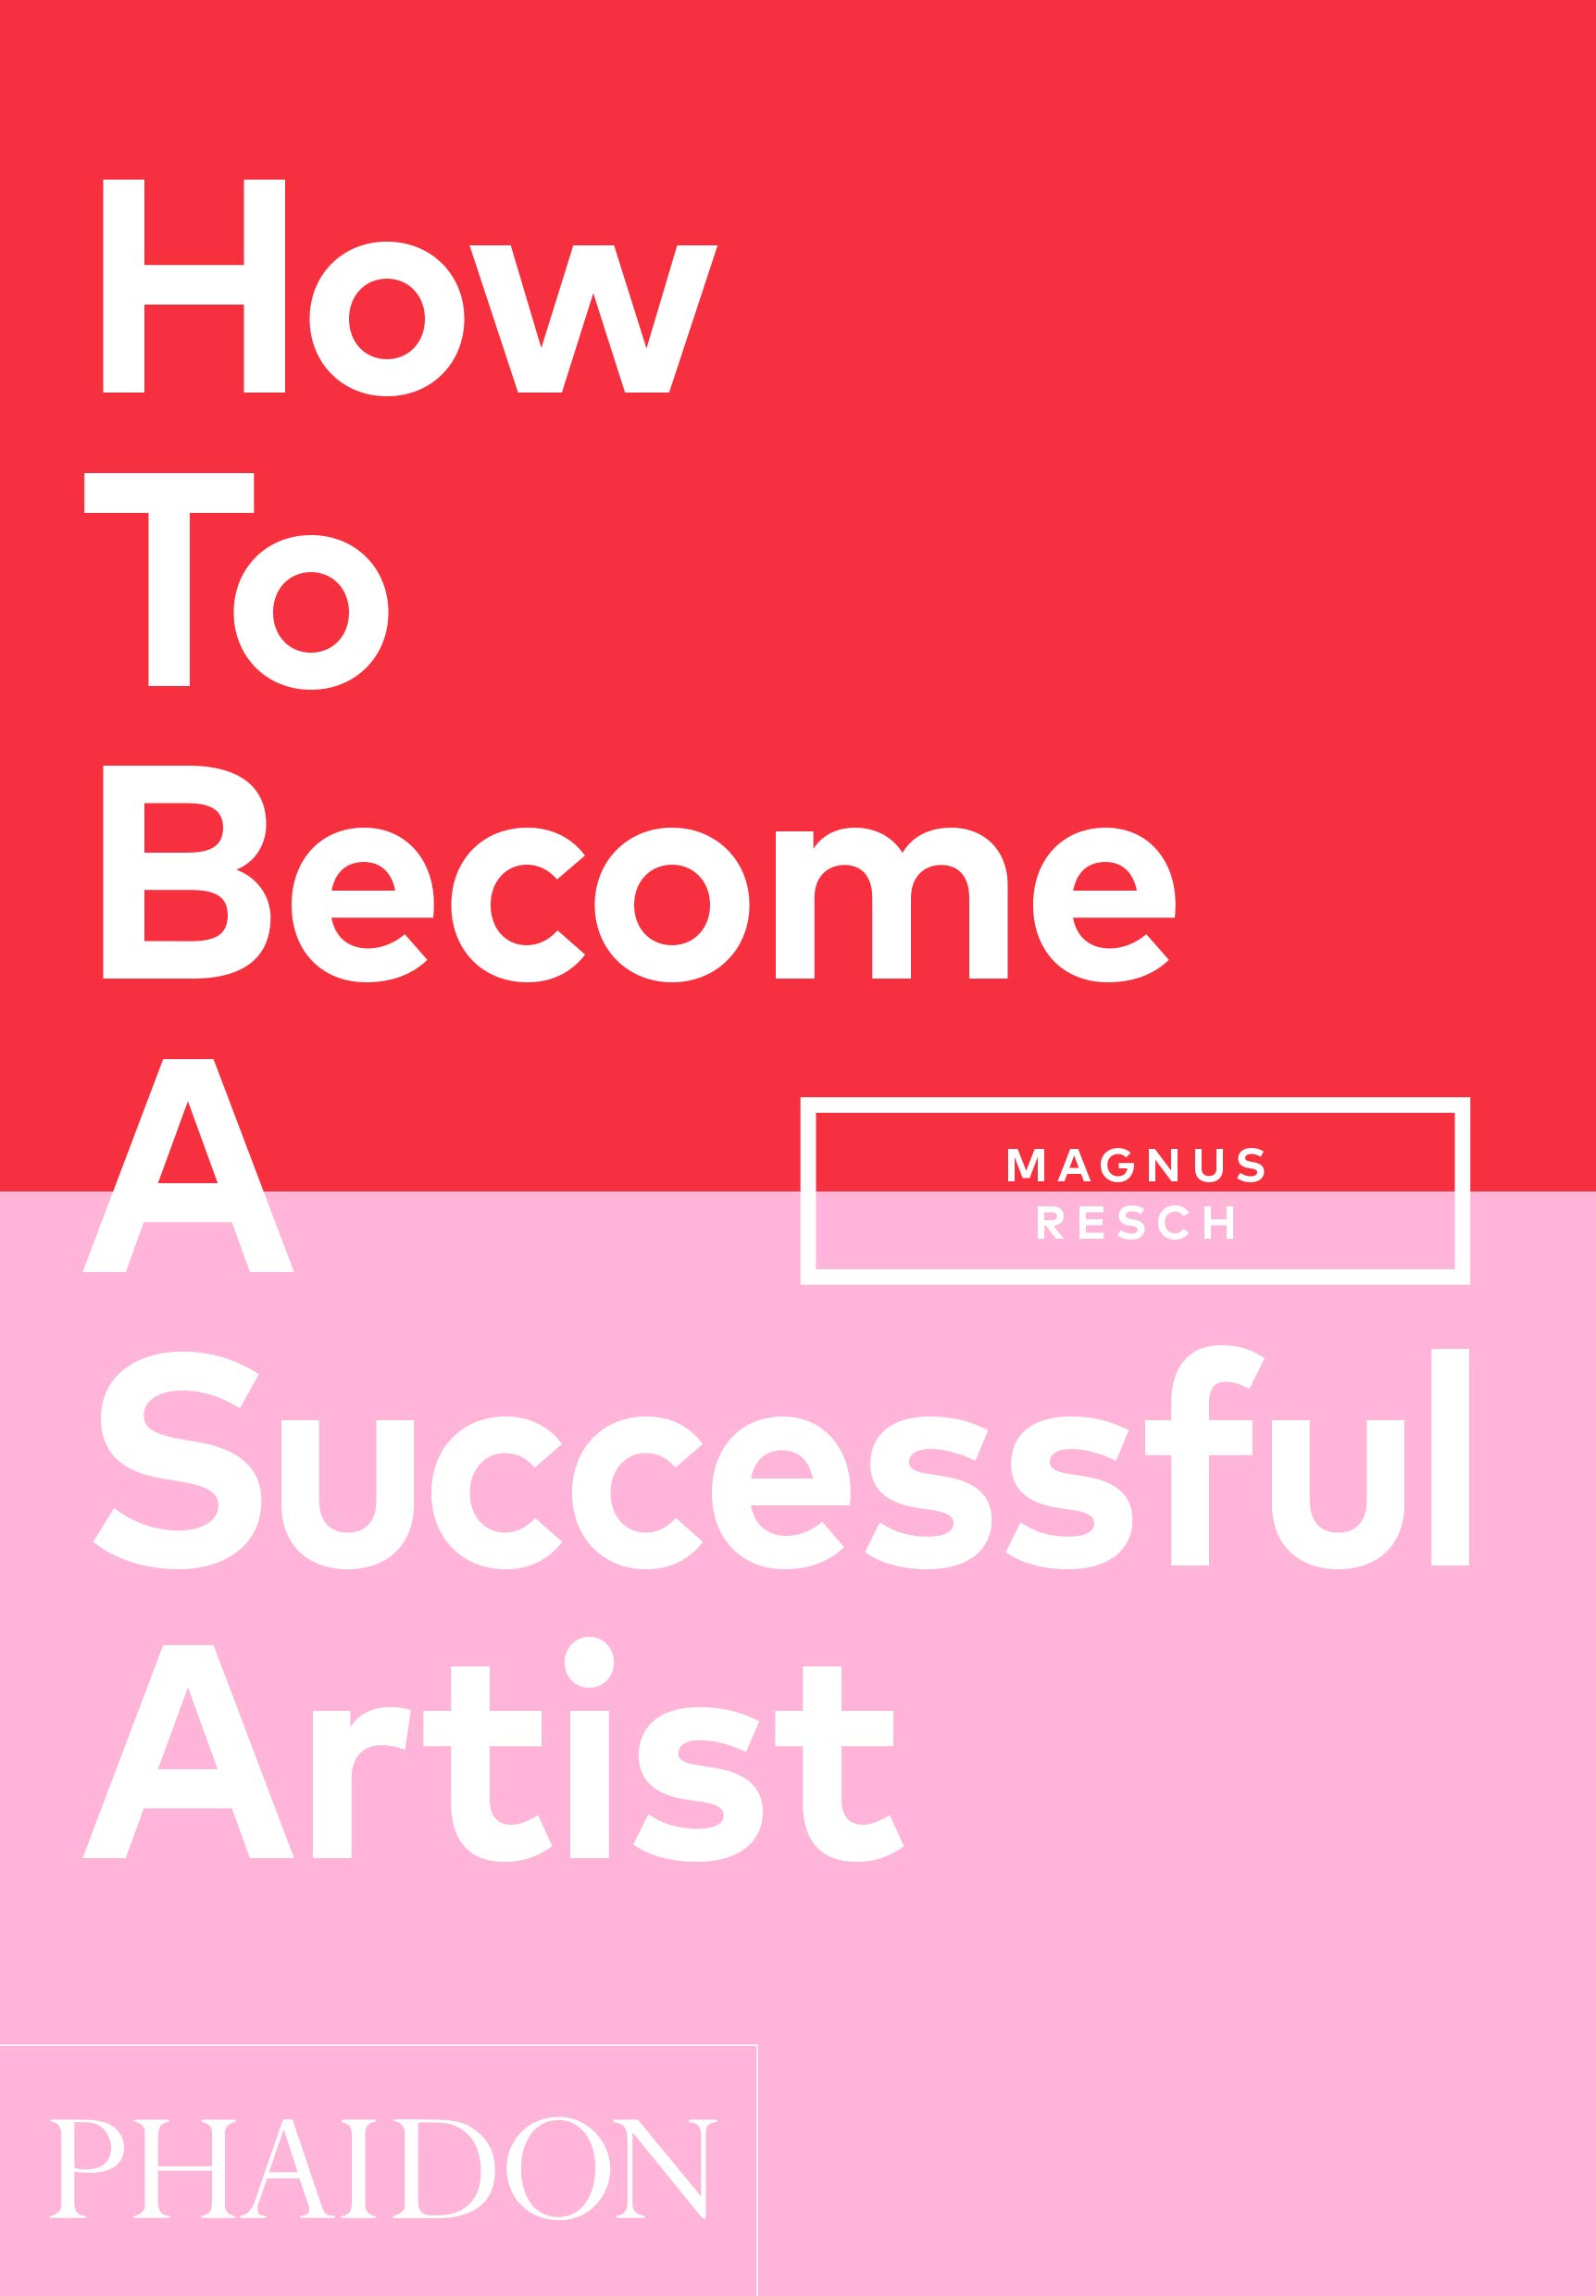 How to a Successful Artist Magnus Resch